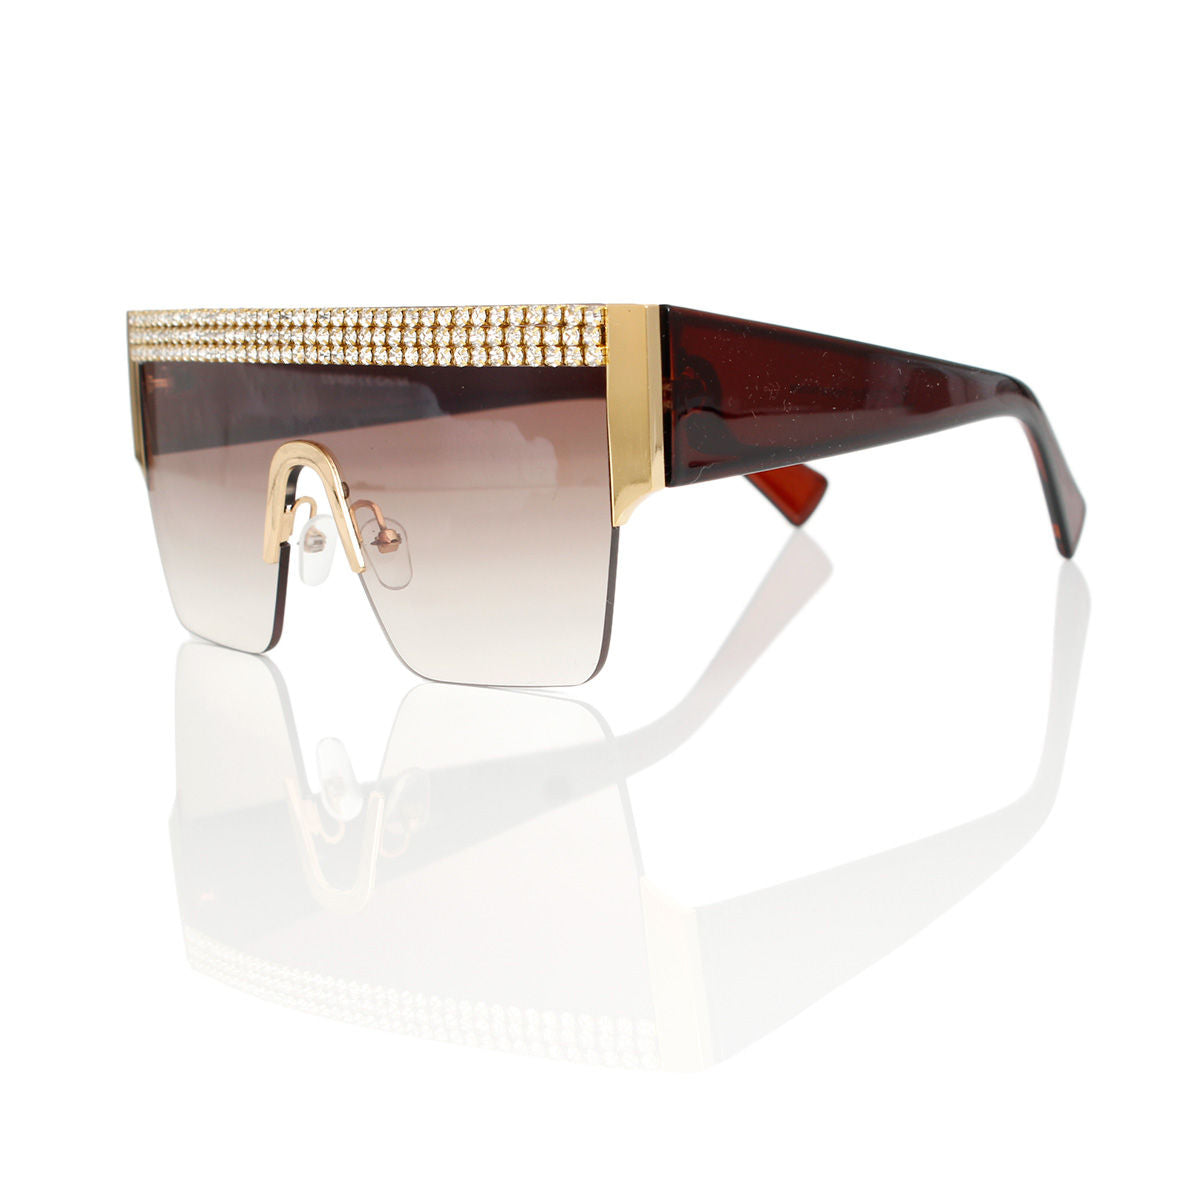 Sunglasses Shield Pave Brown Eyewear for Women